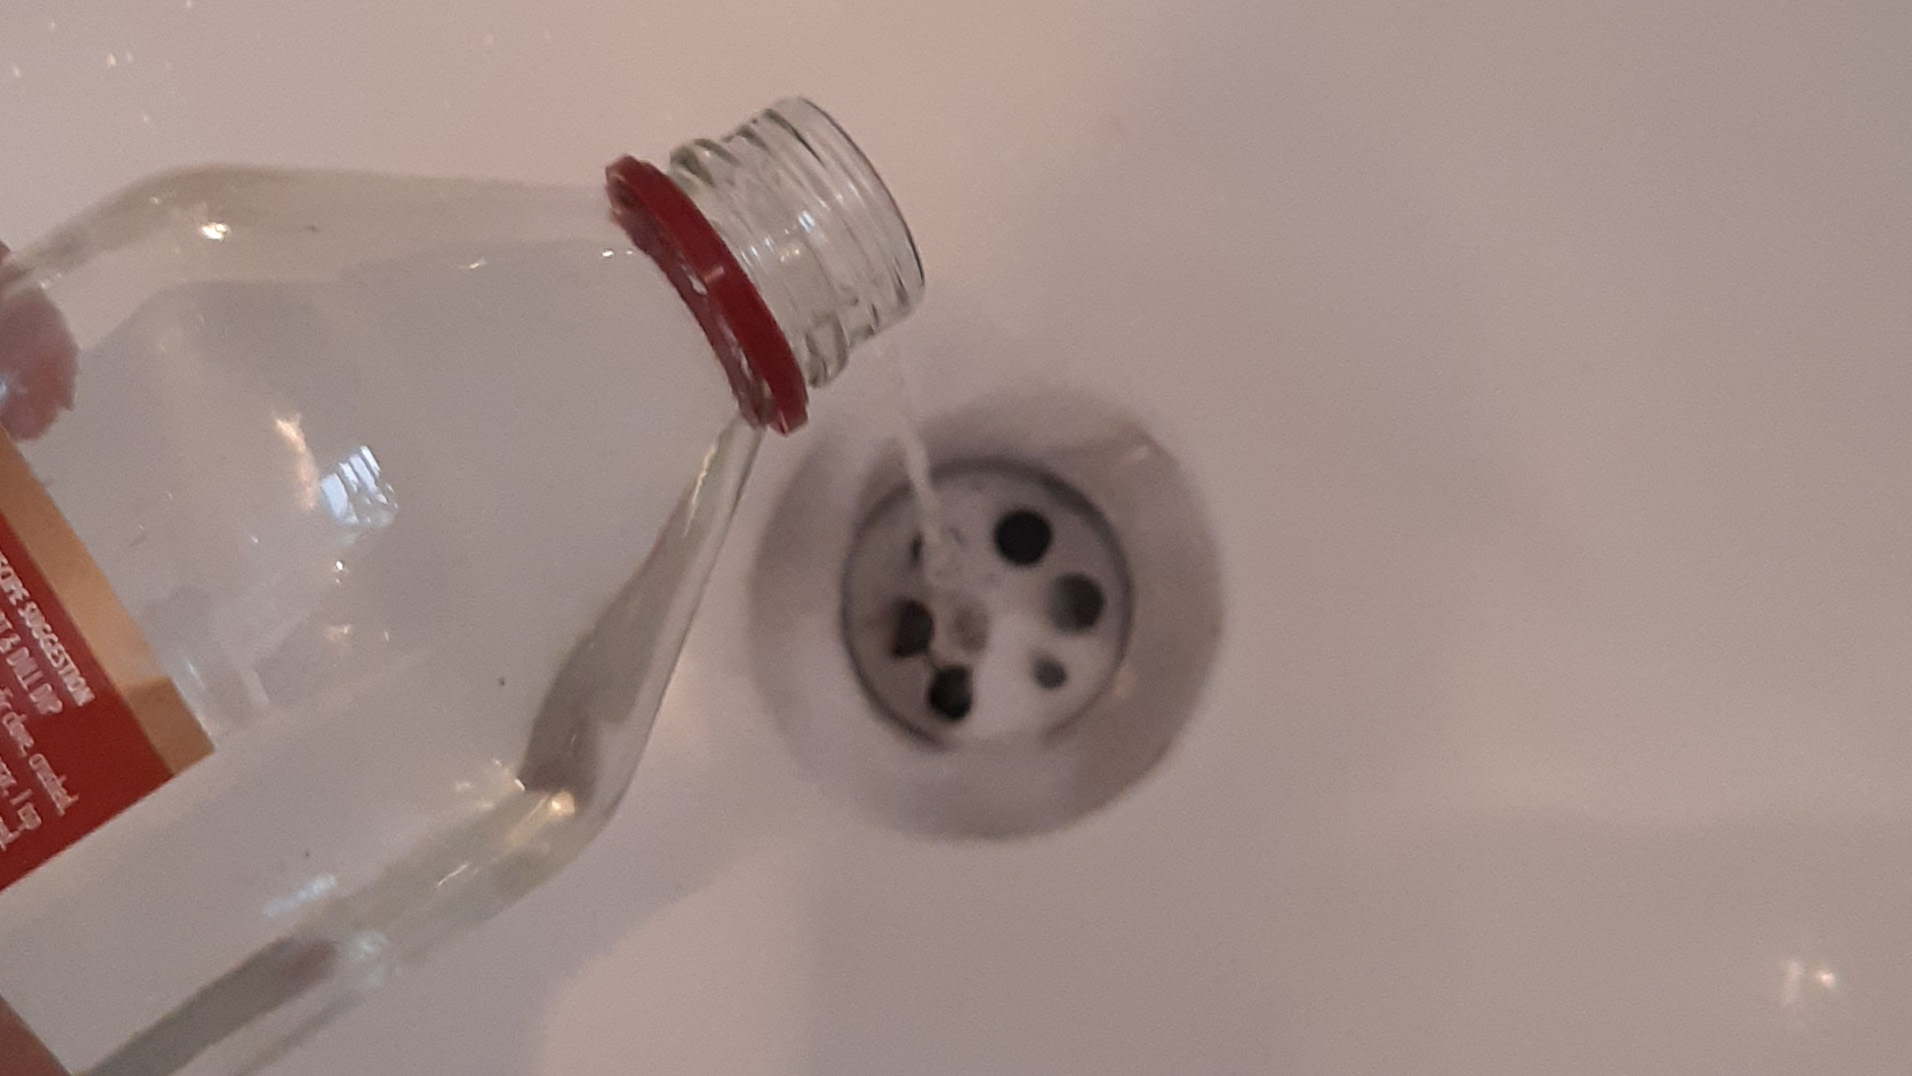 Vinegar poured in bath drain